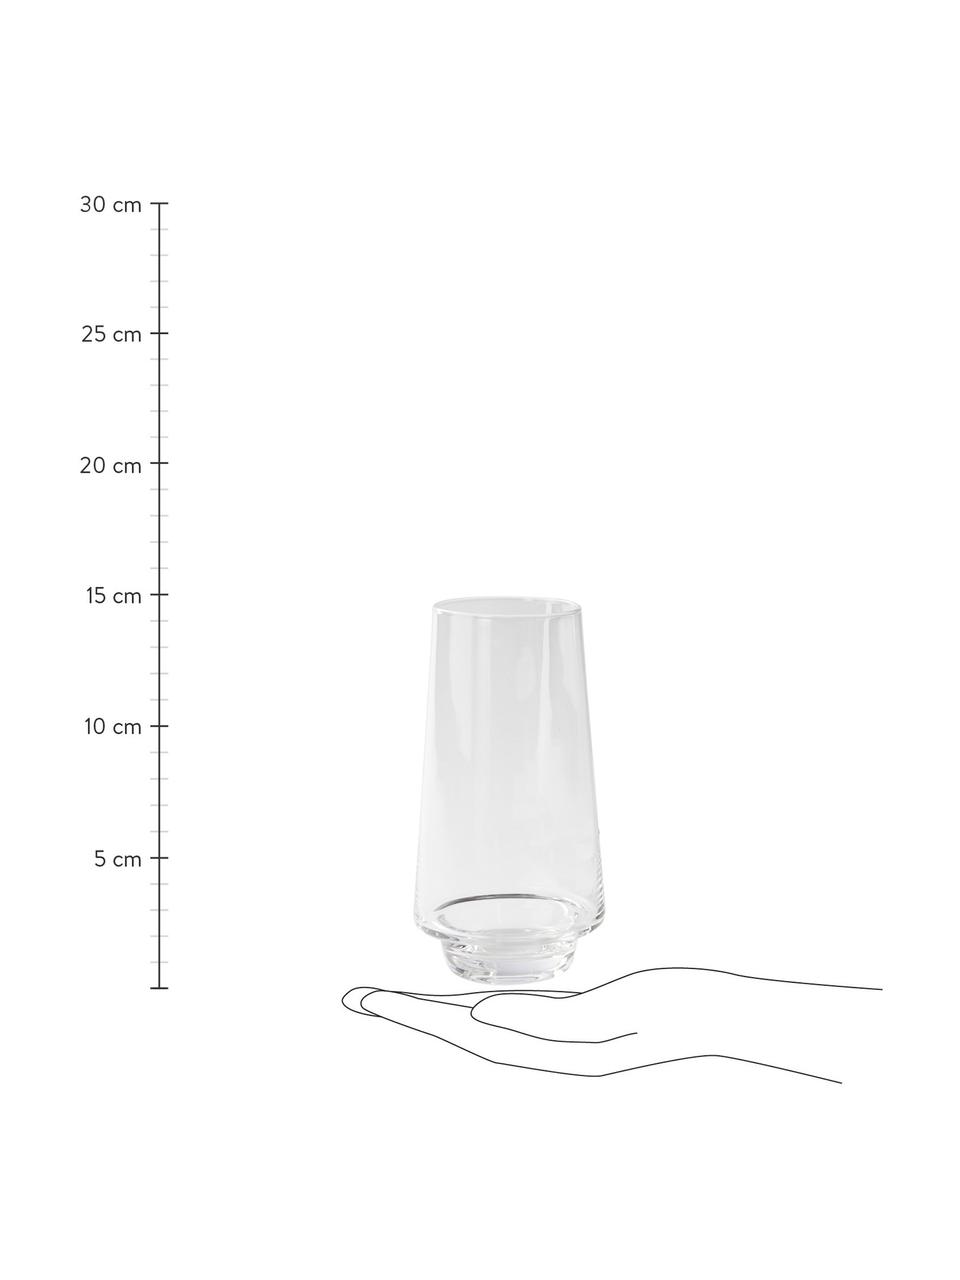 Wassergläser Kai in Transparent, 4 Stück, Glas, Transparent, Ø 6 x H 15 cm, 450 ml